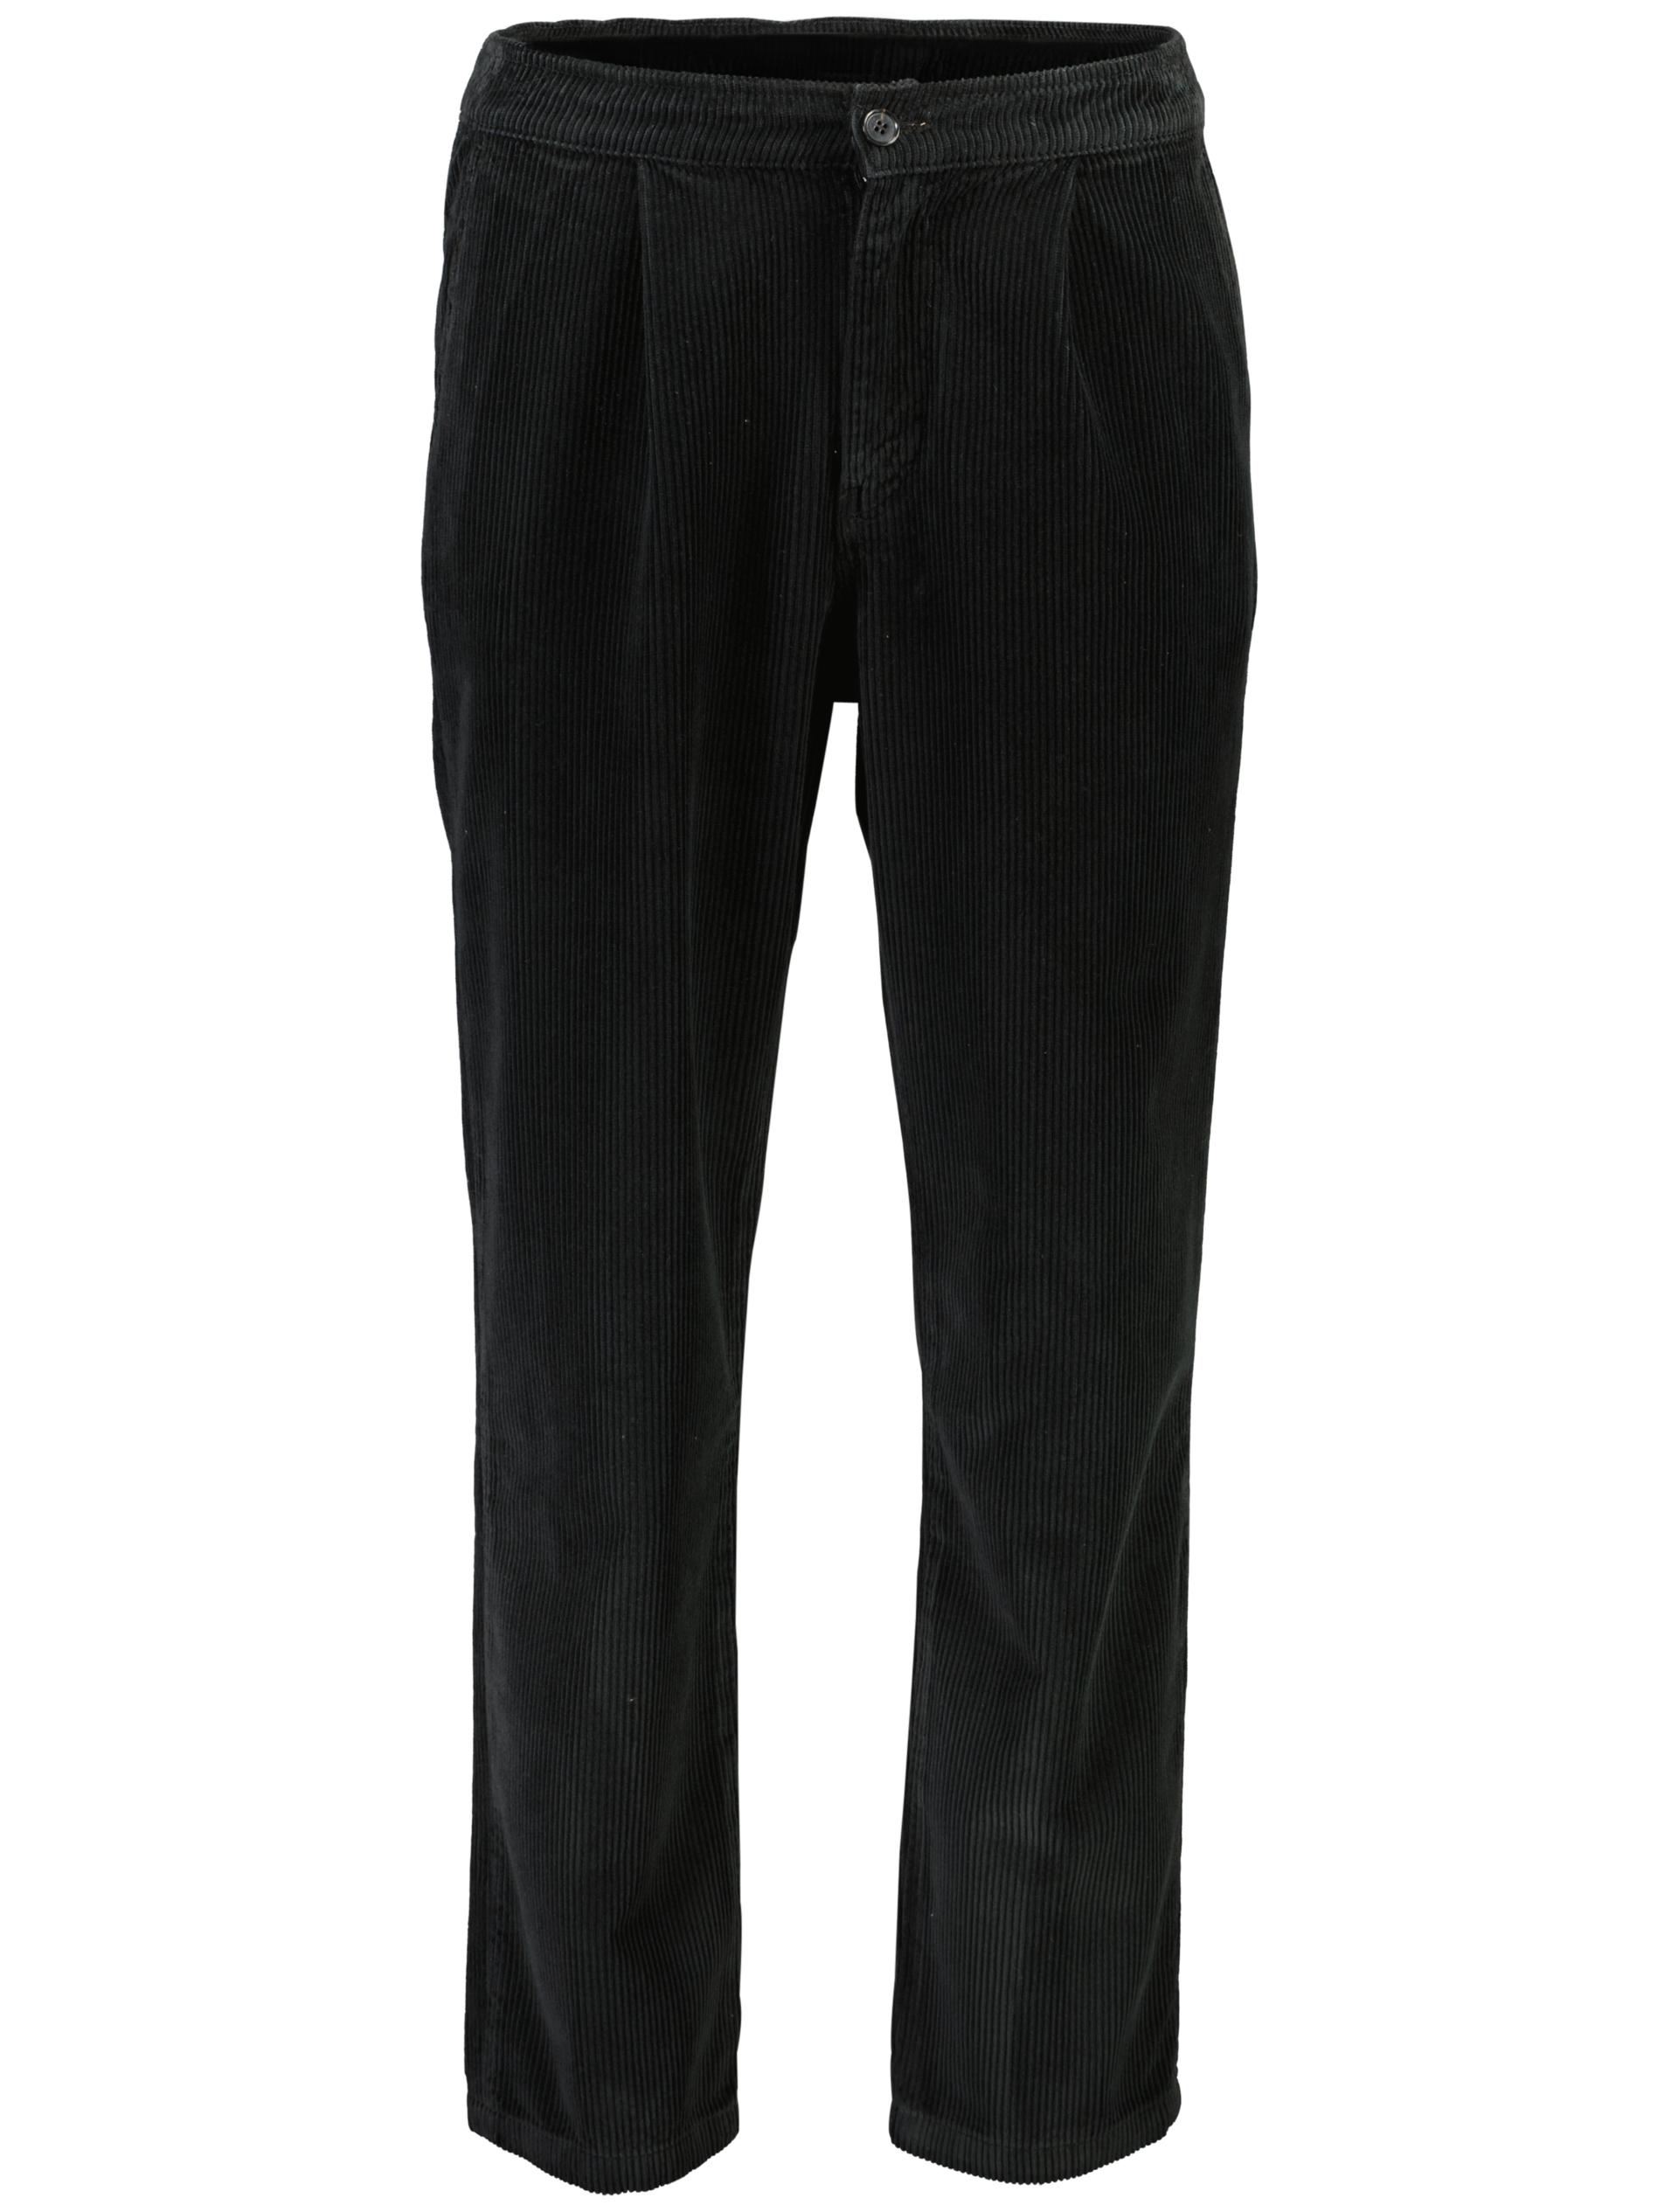 Junk de Luxe Corduroy trousers black / black